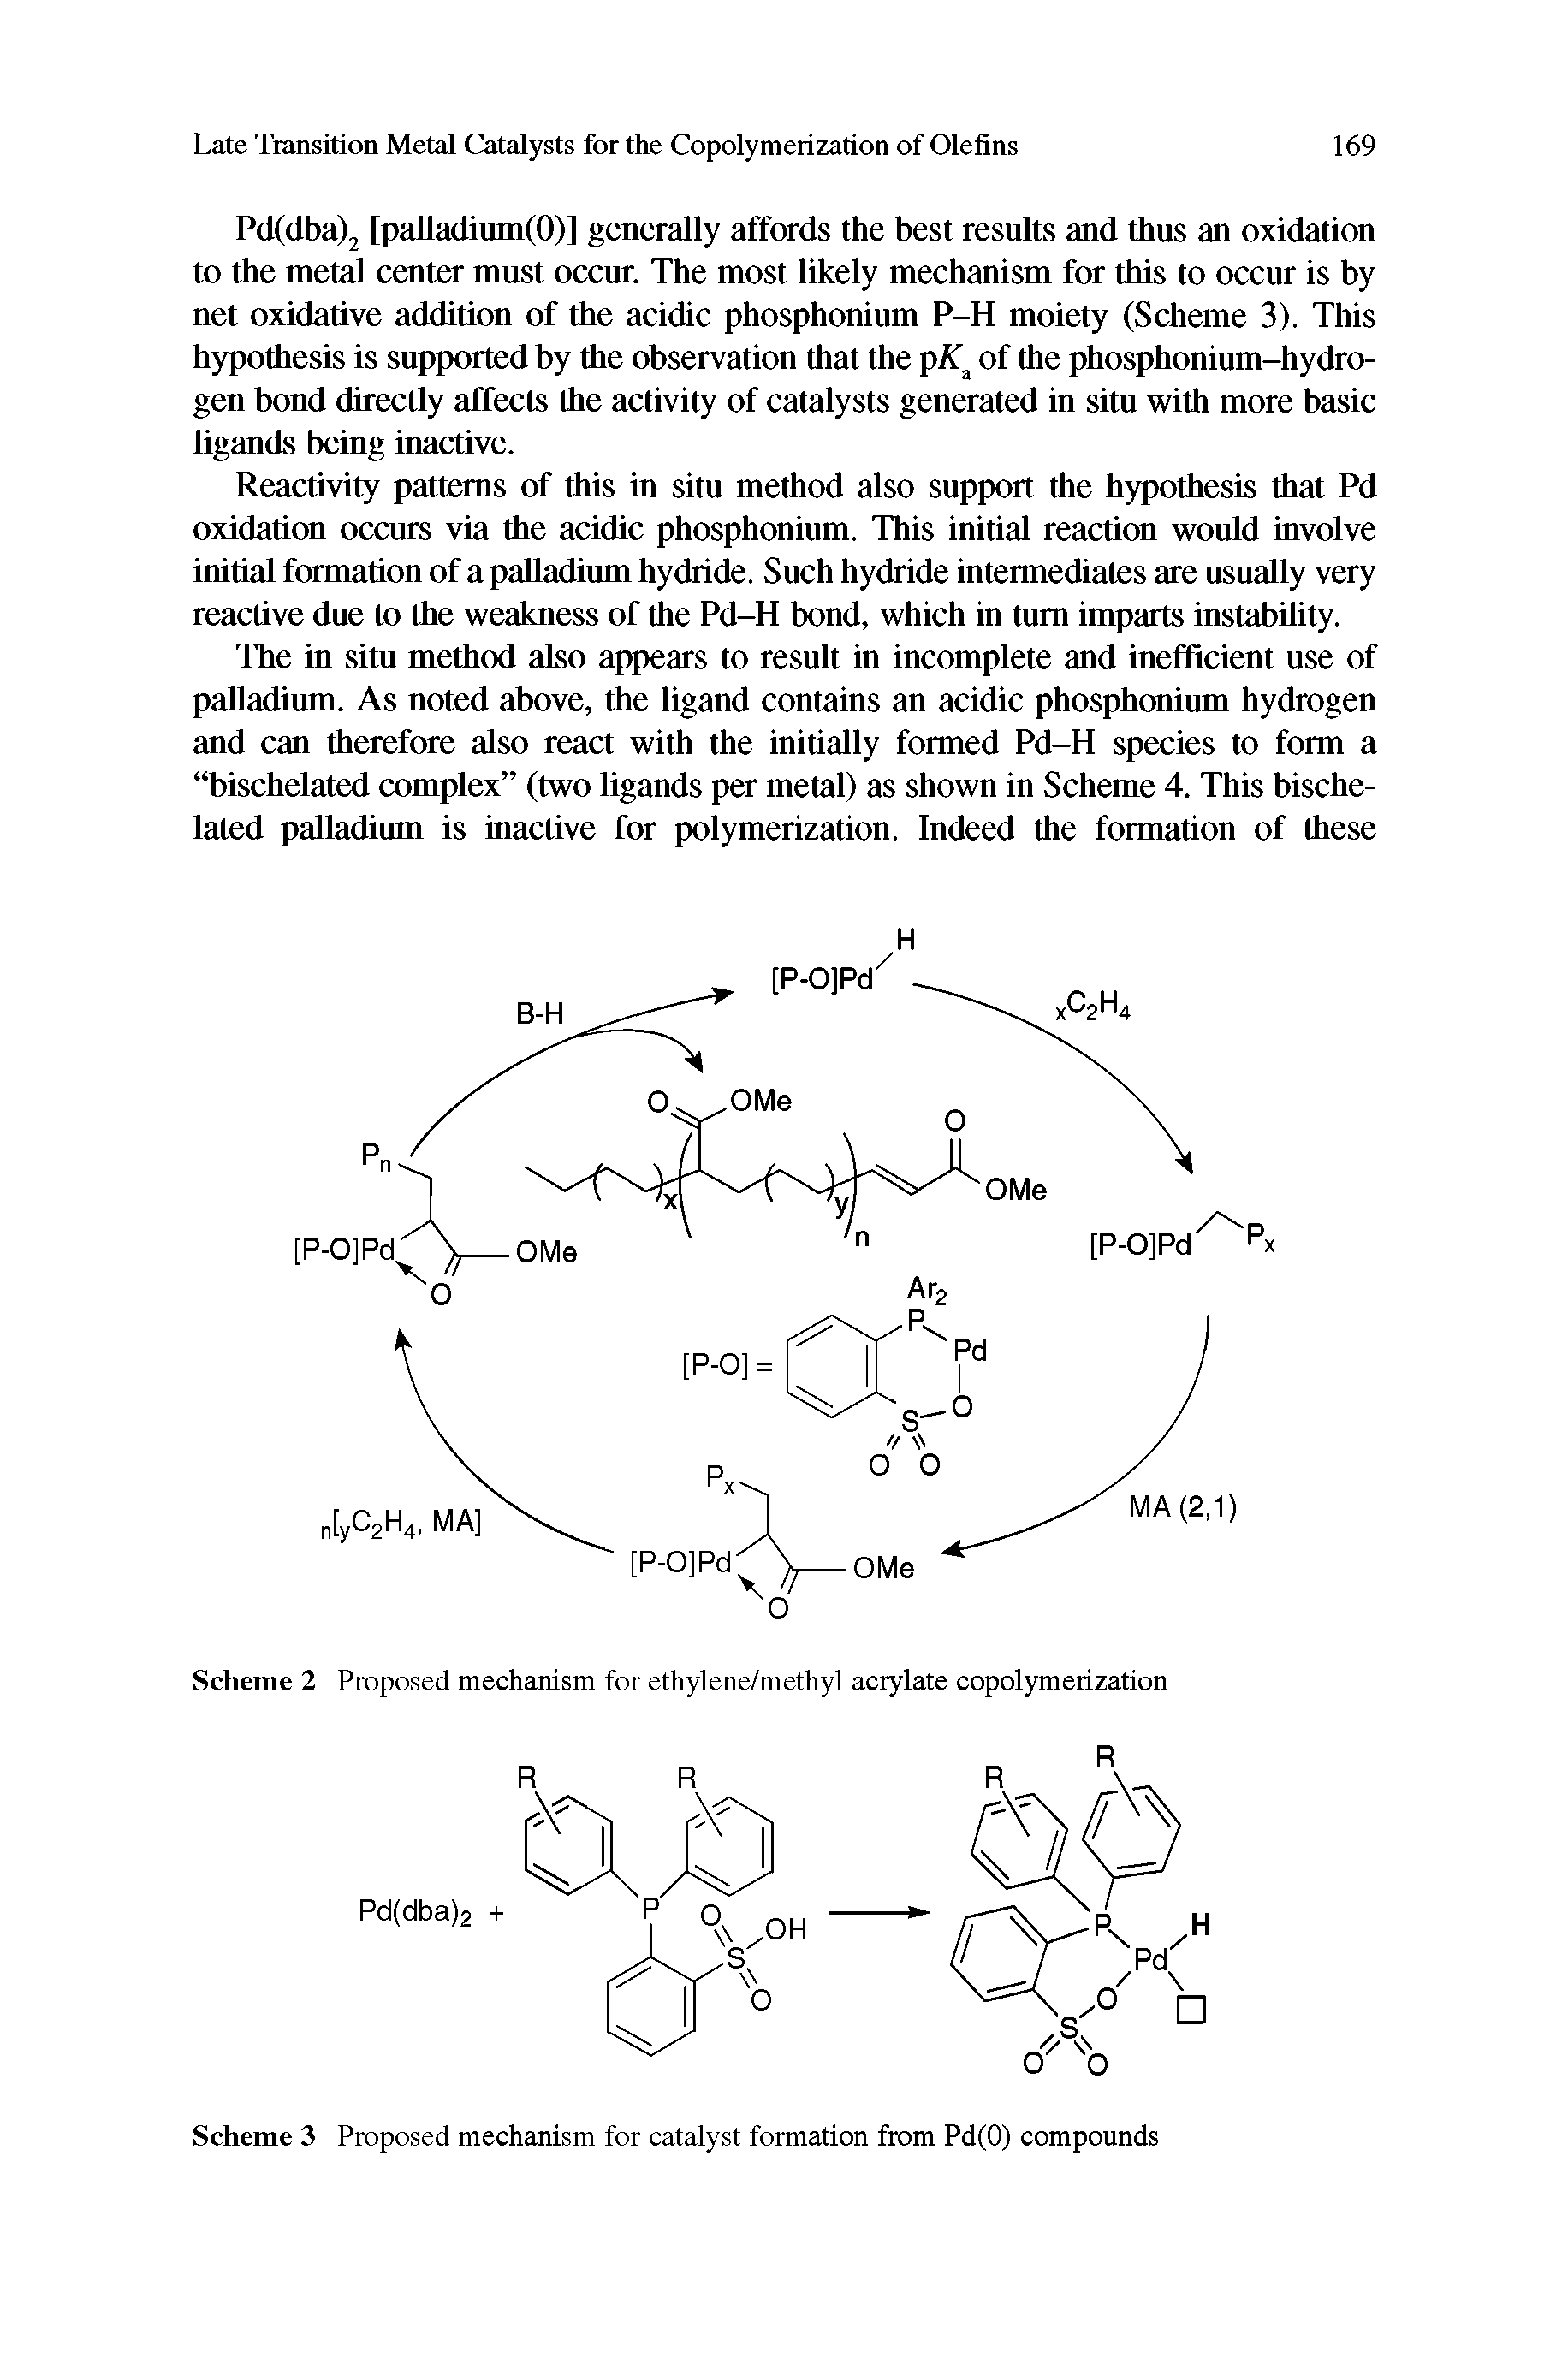 Scheme 2 Proposed mechanism for ethylene/methyl acrylate copolymerization...